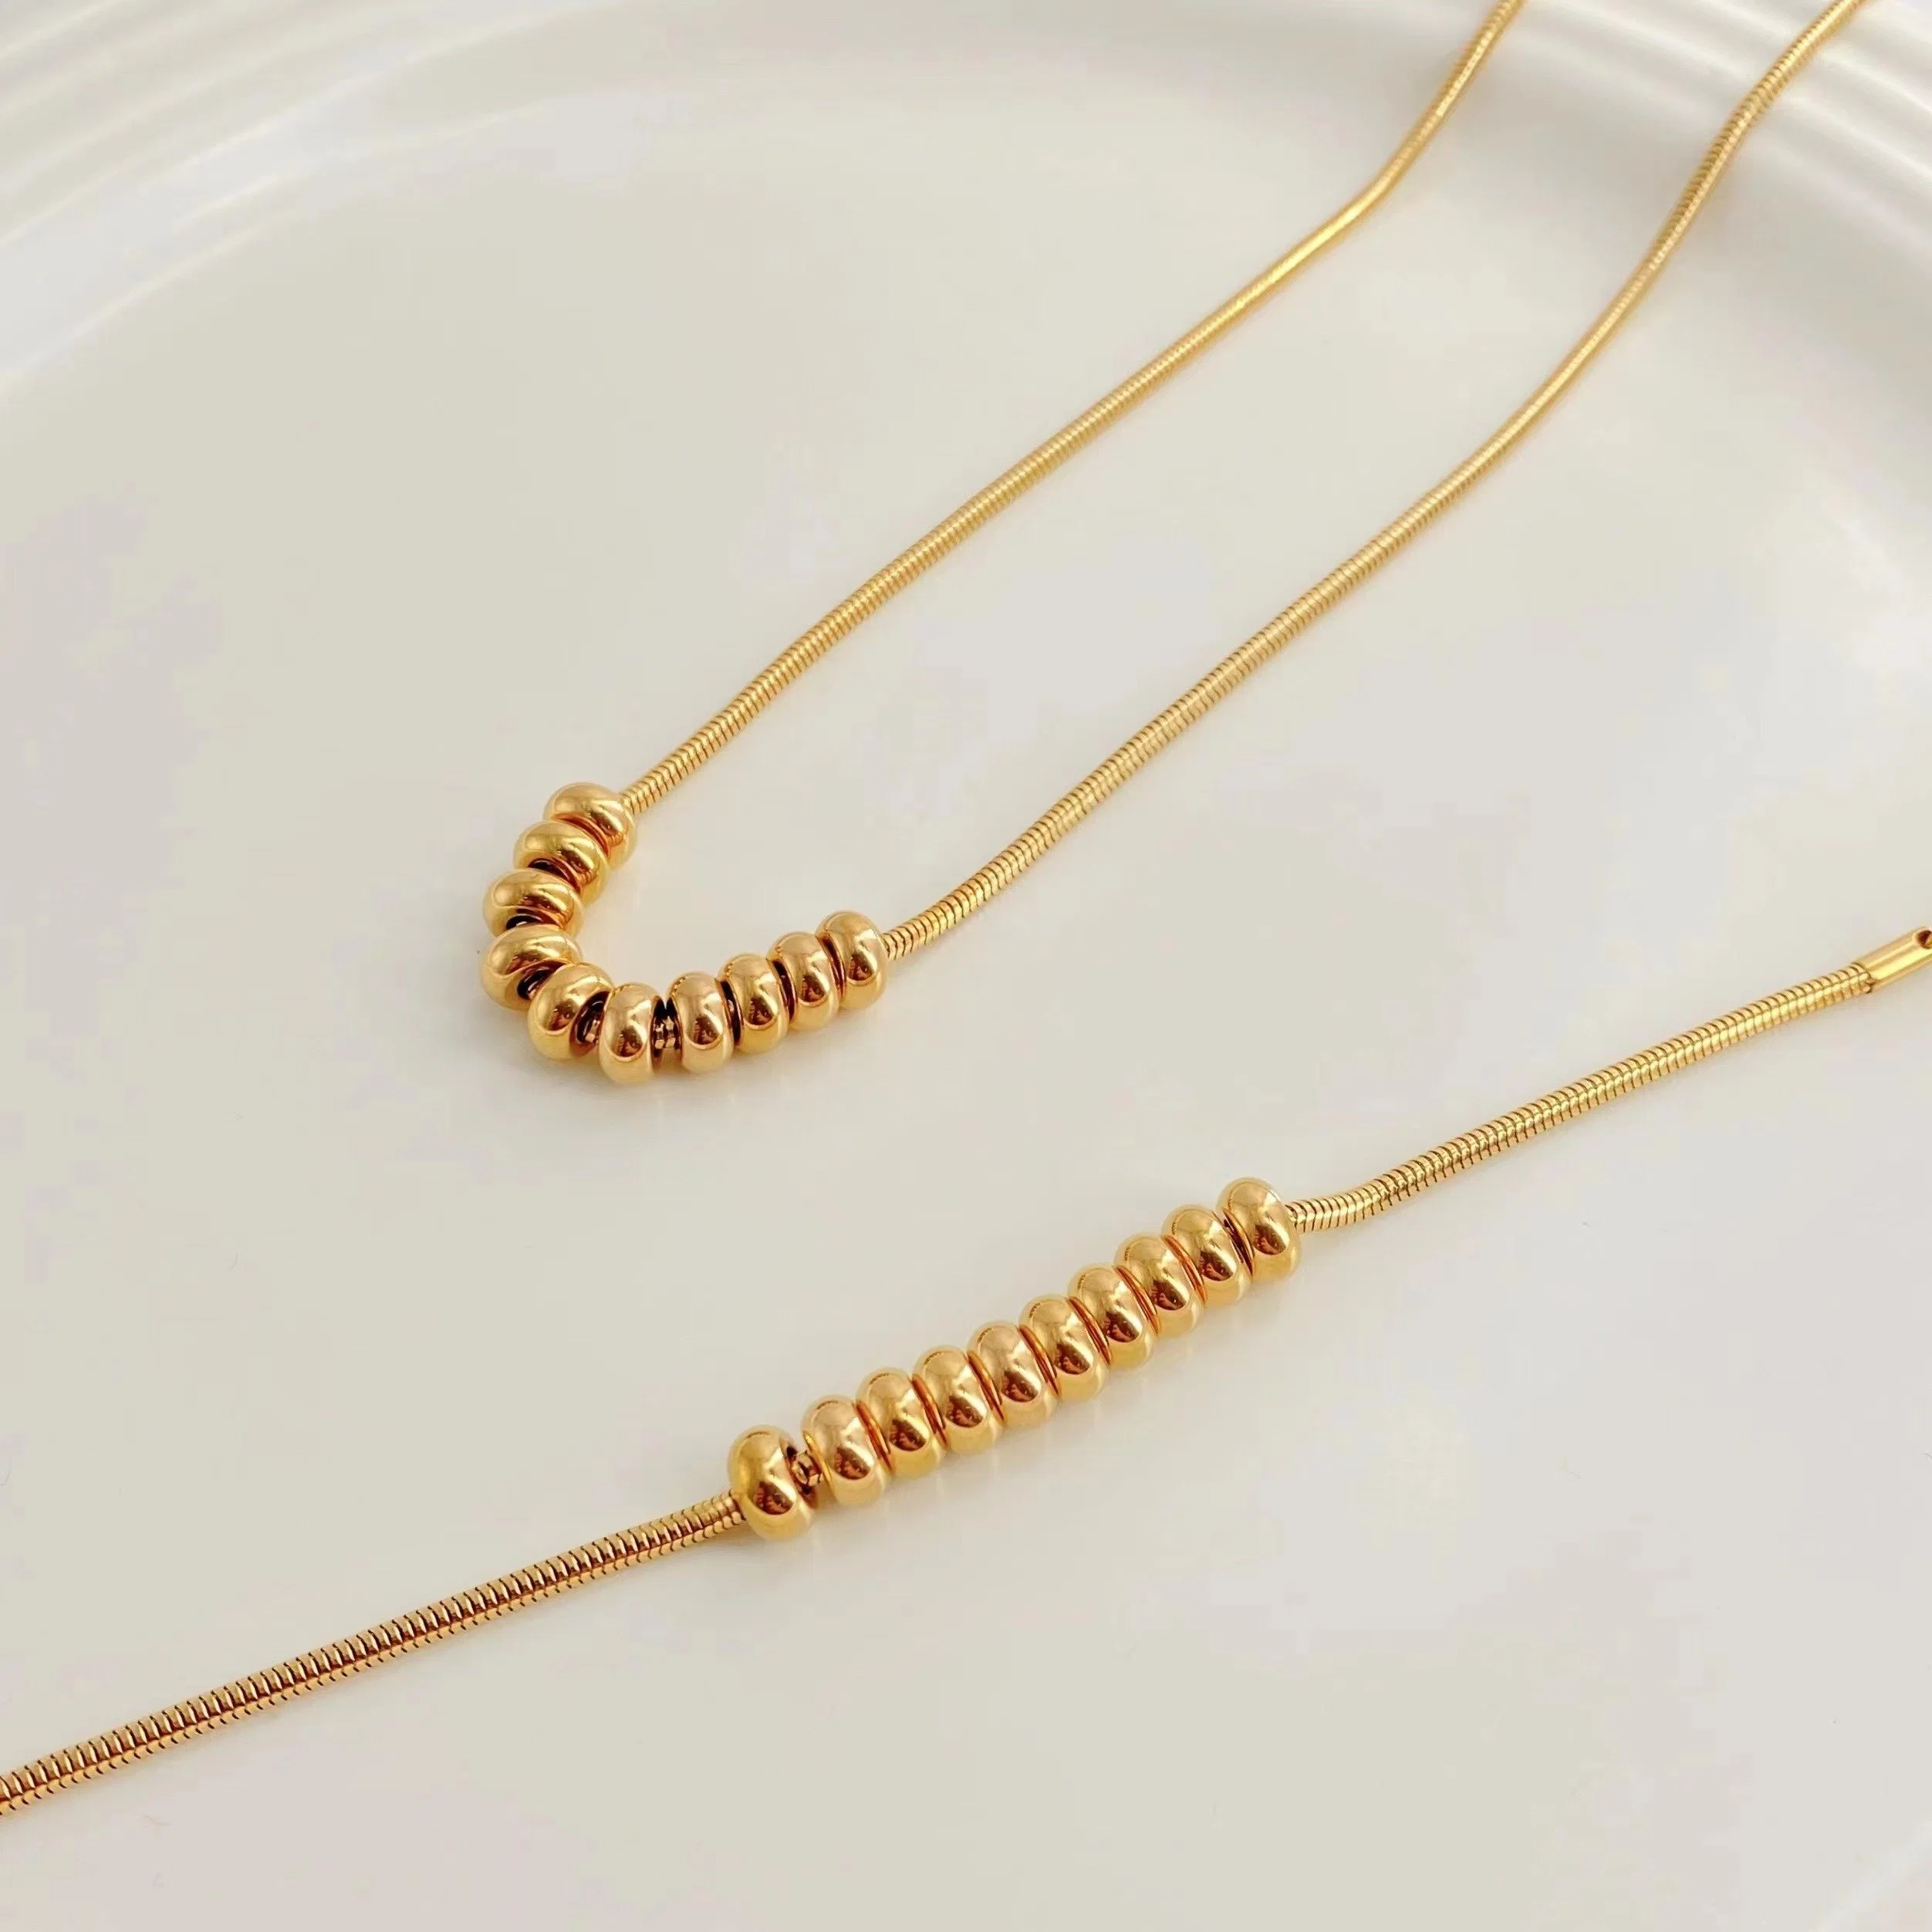 Edelstahl Schmuck Mode Custom Golden Perlen Anhänger Kette Halskette Schmuckset